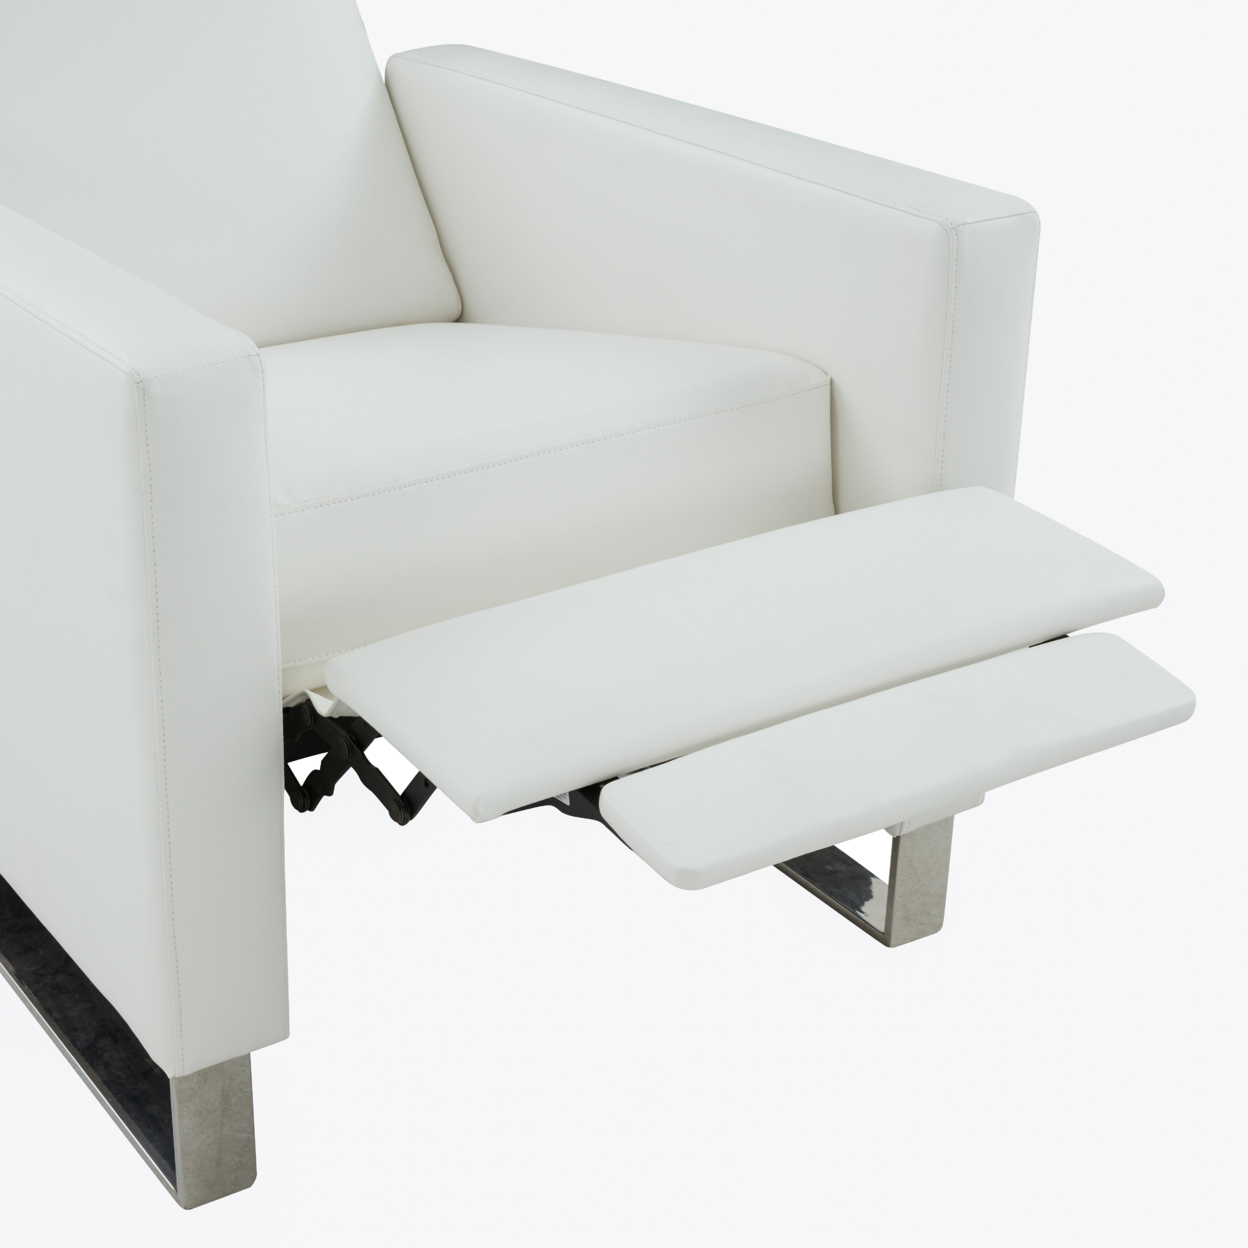 SAFAVIEH COUTURE Brenton Recliner Chair White / Silver